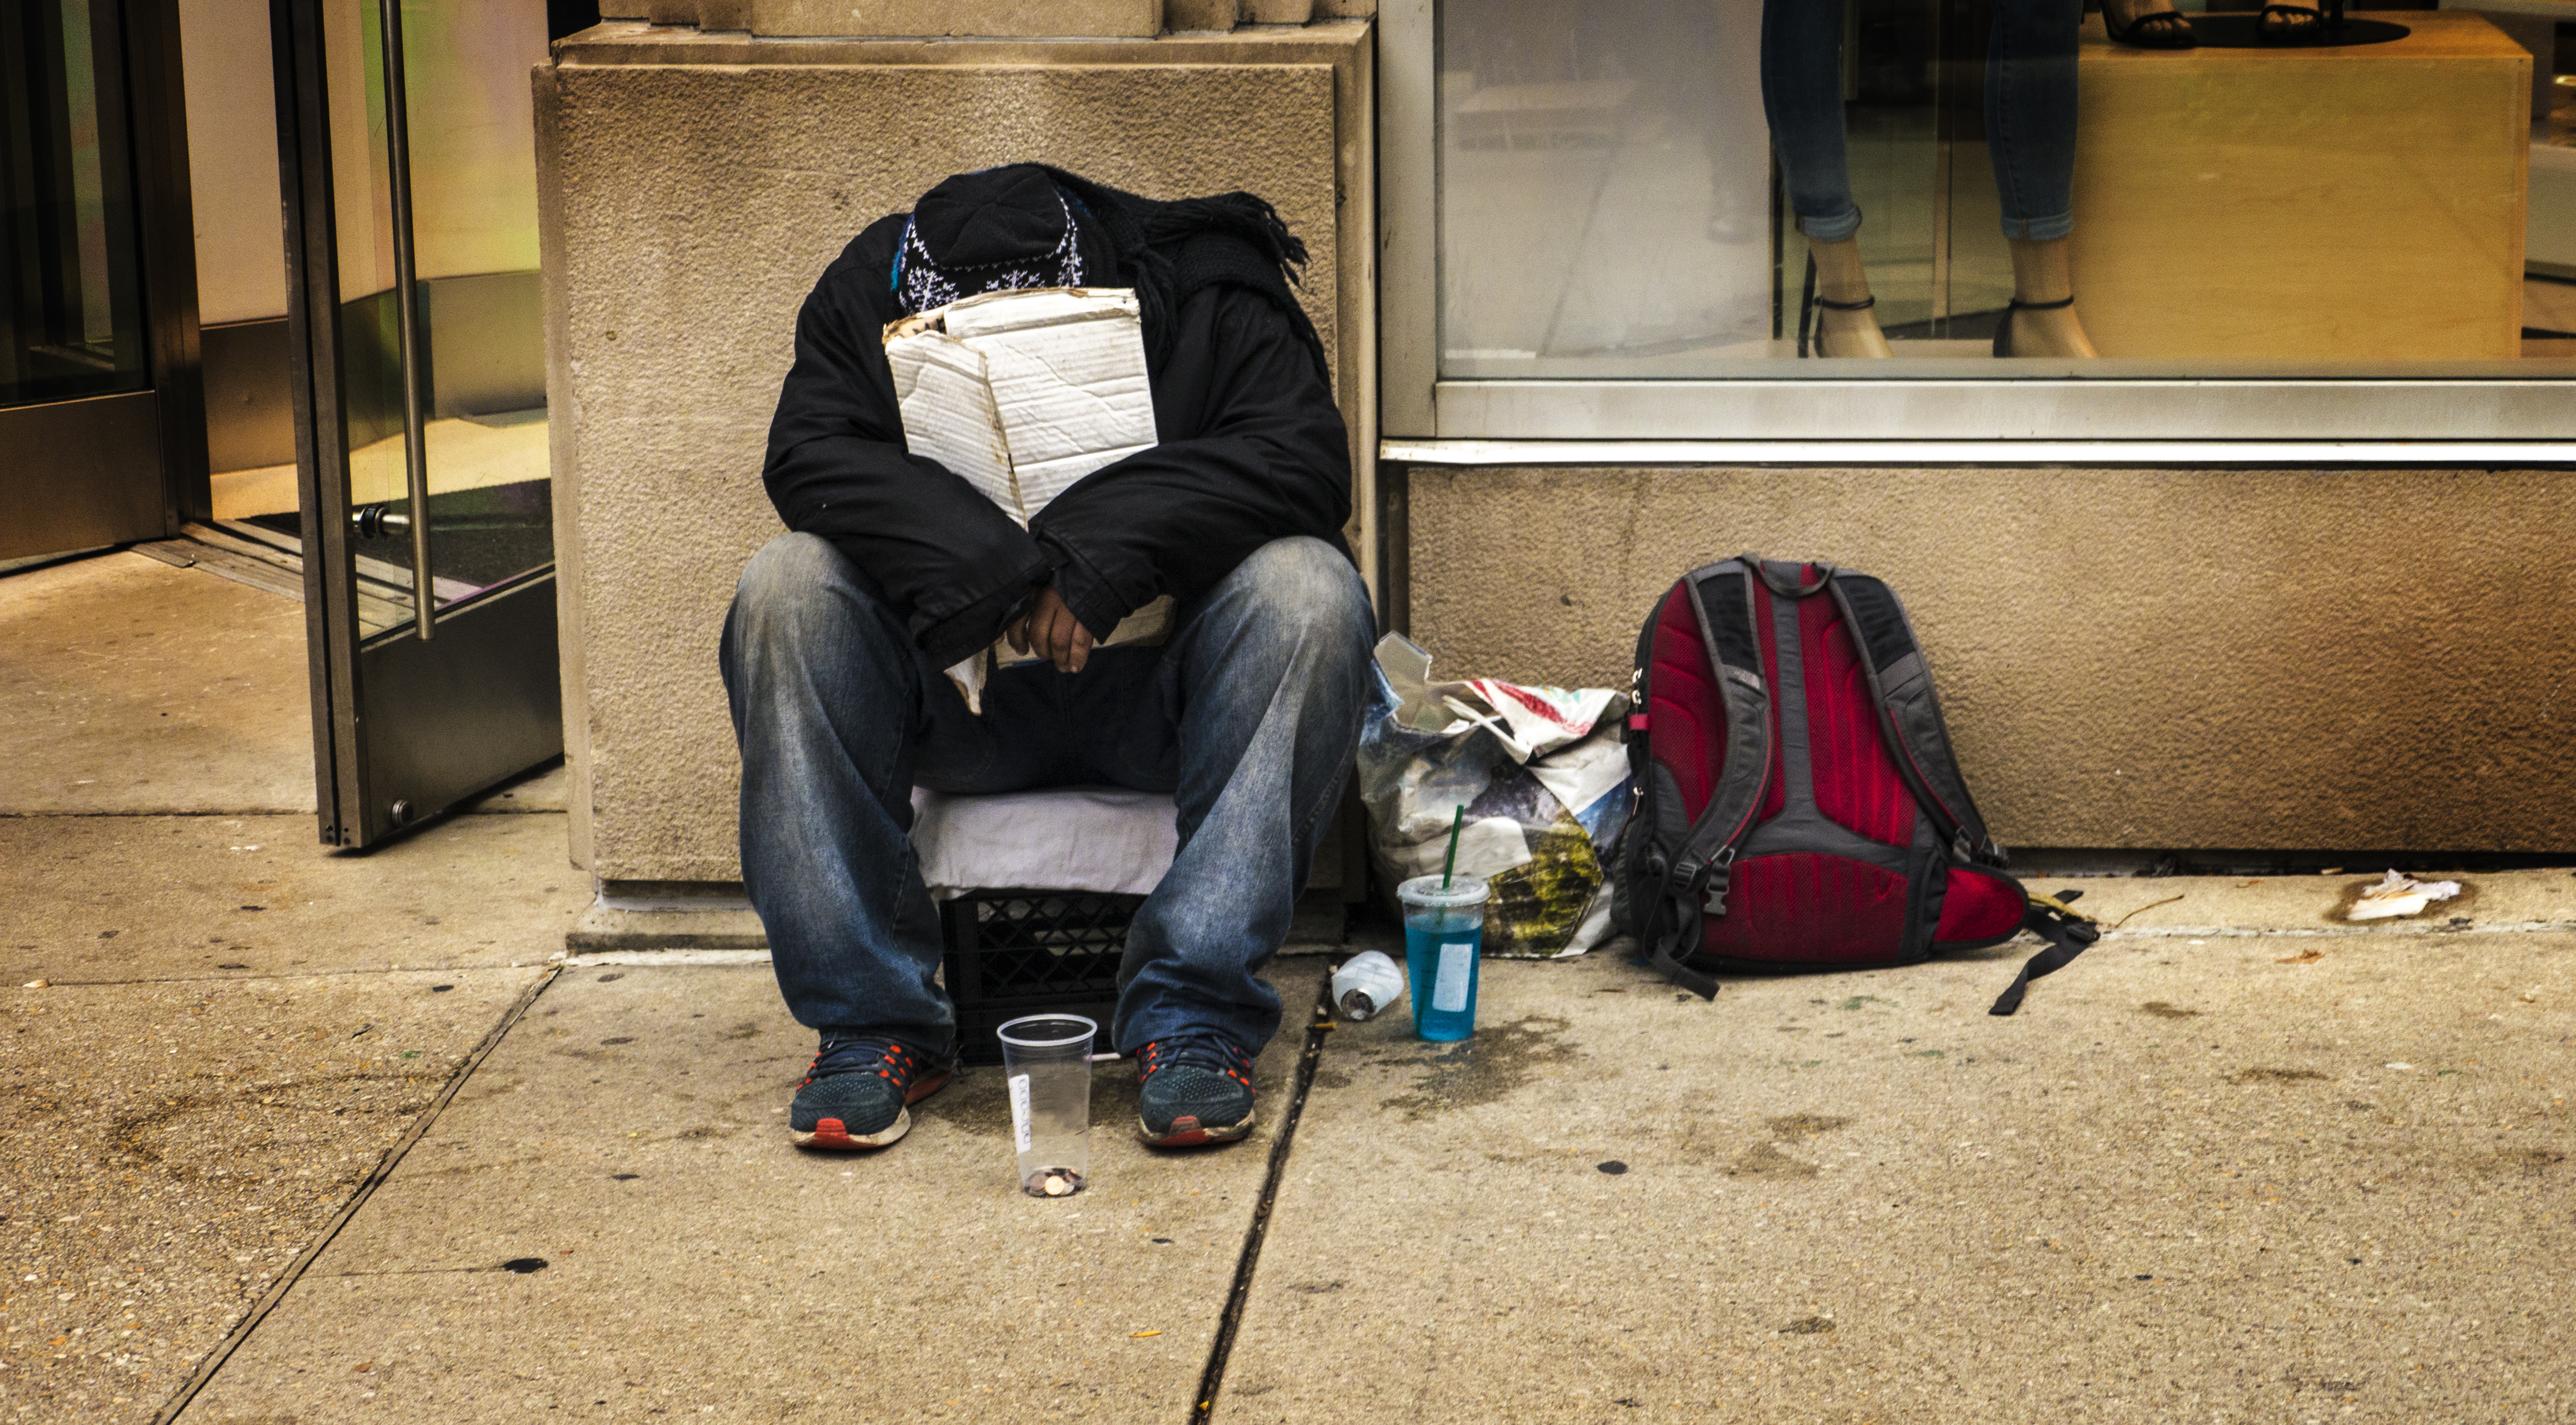 Homeless person sitting on city sidewalk.